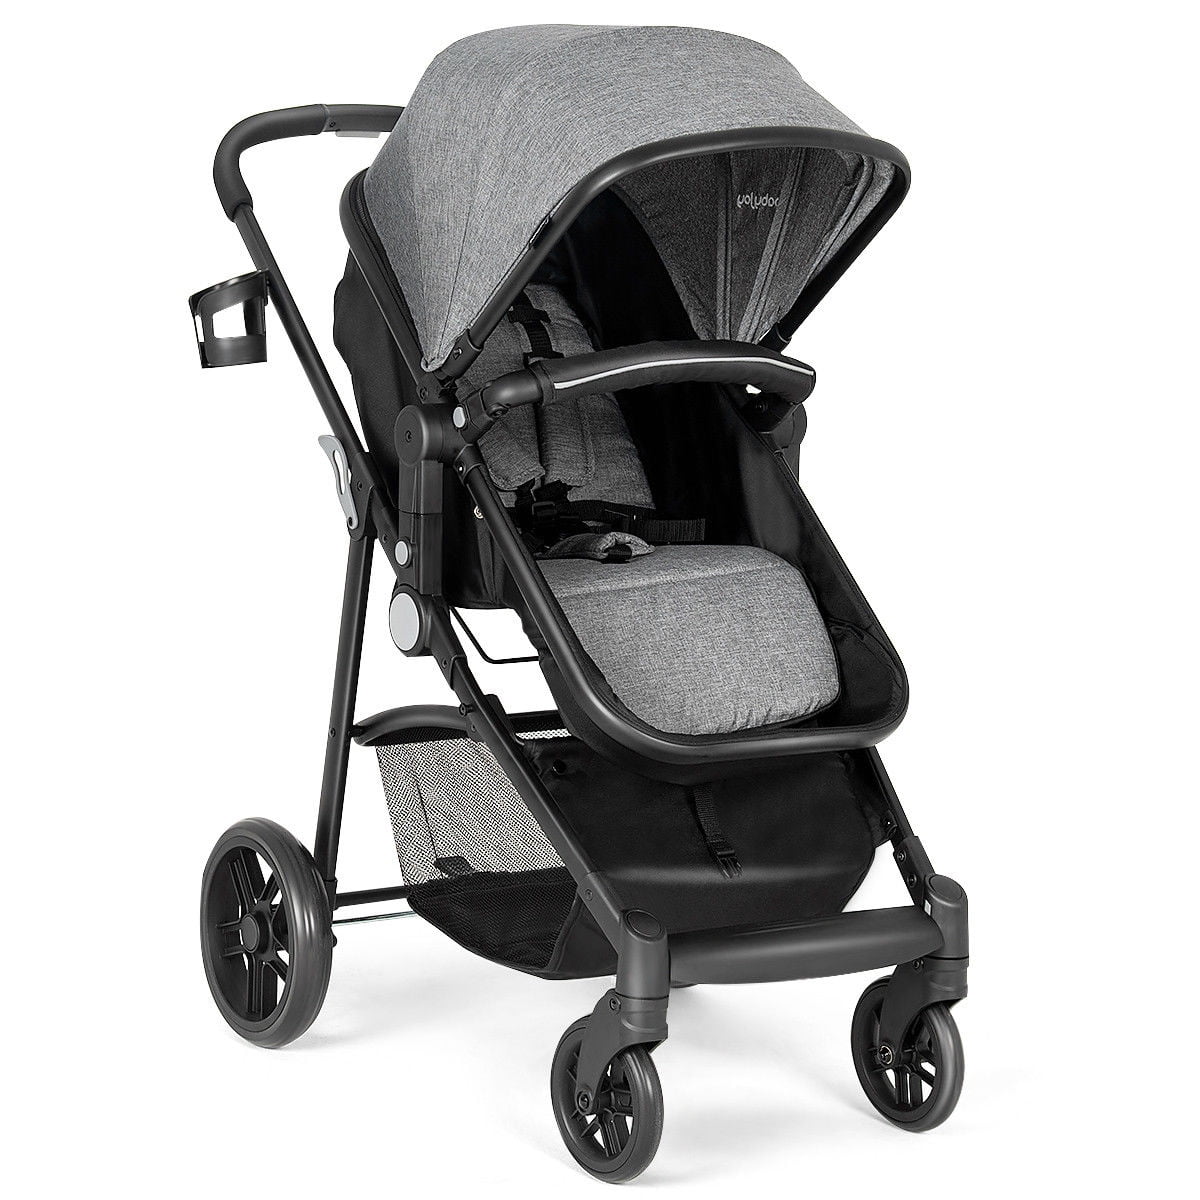 Folding Baby Stroller 3 in 1 Outdoor Traveling Baby Pram Multi